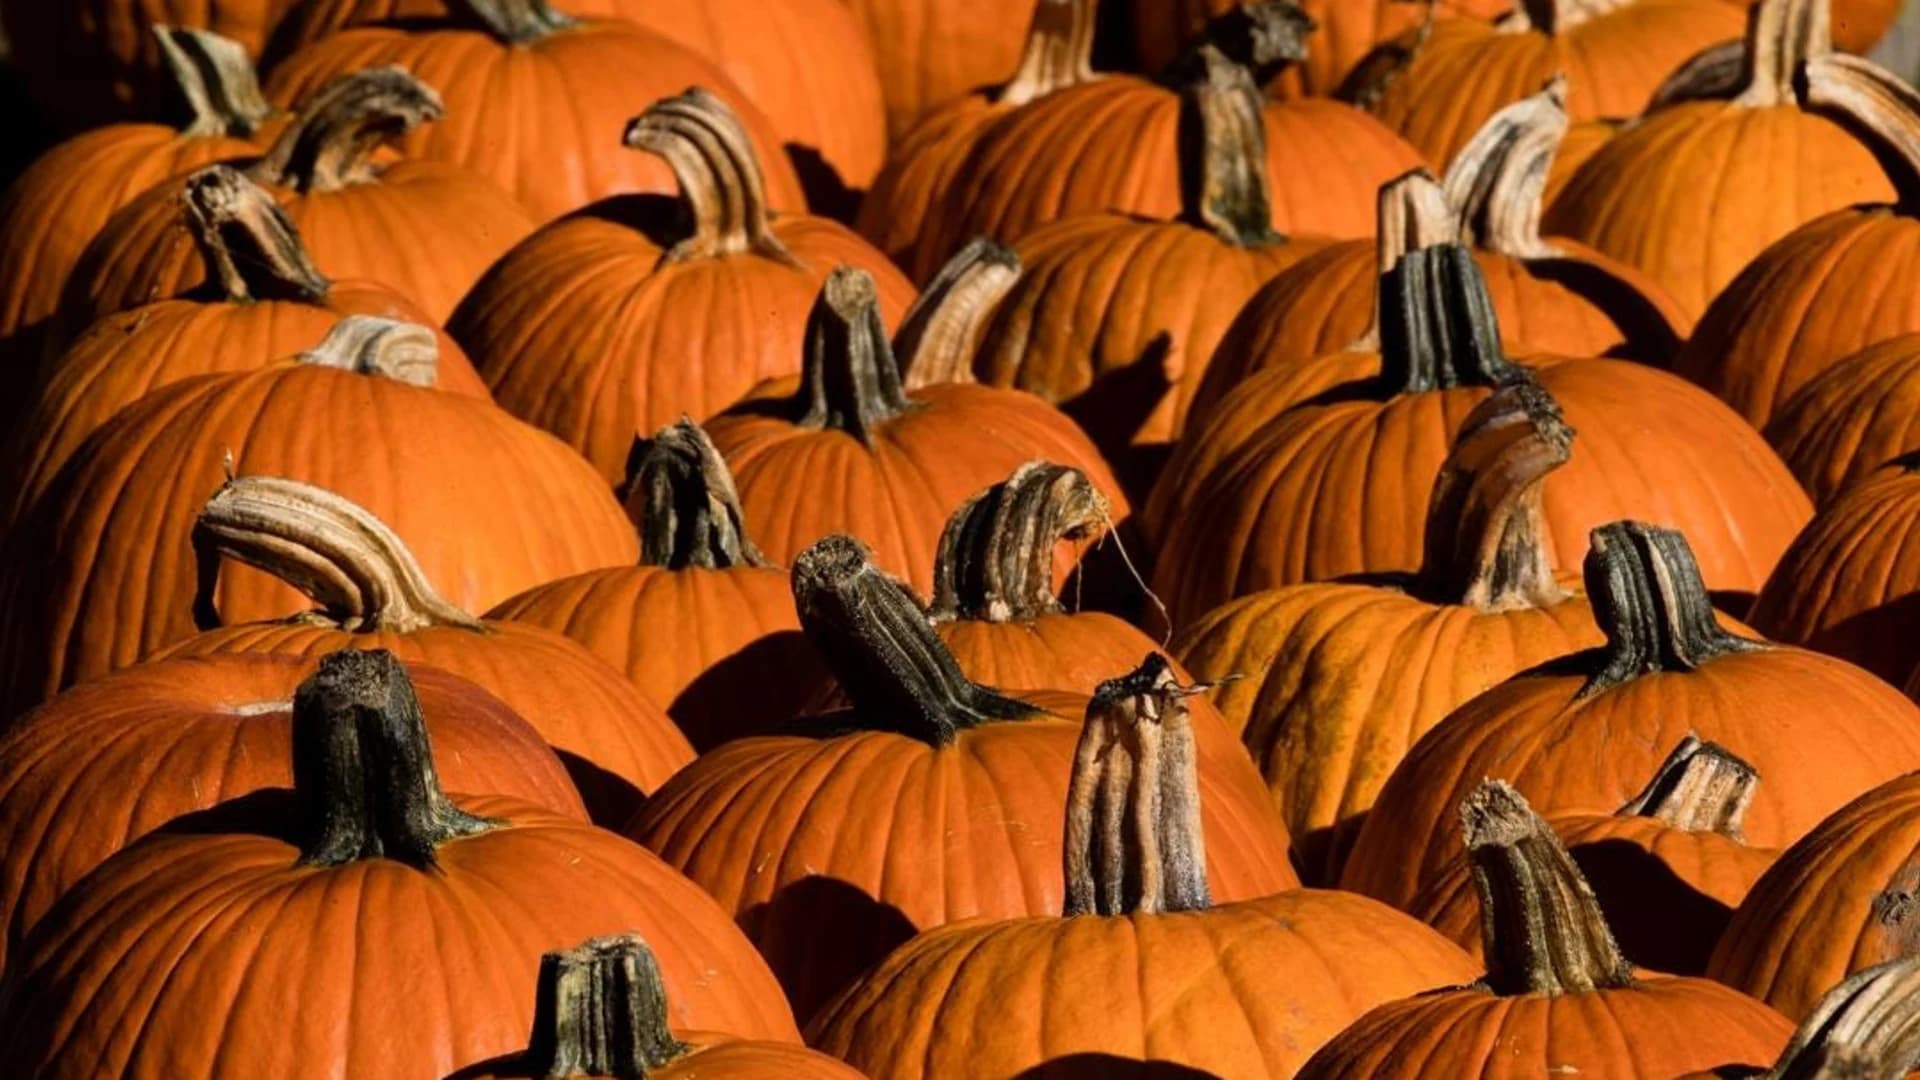 Prime pumpkin-picking season is in full swing